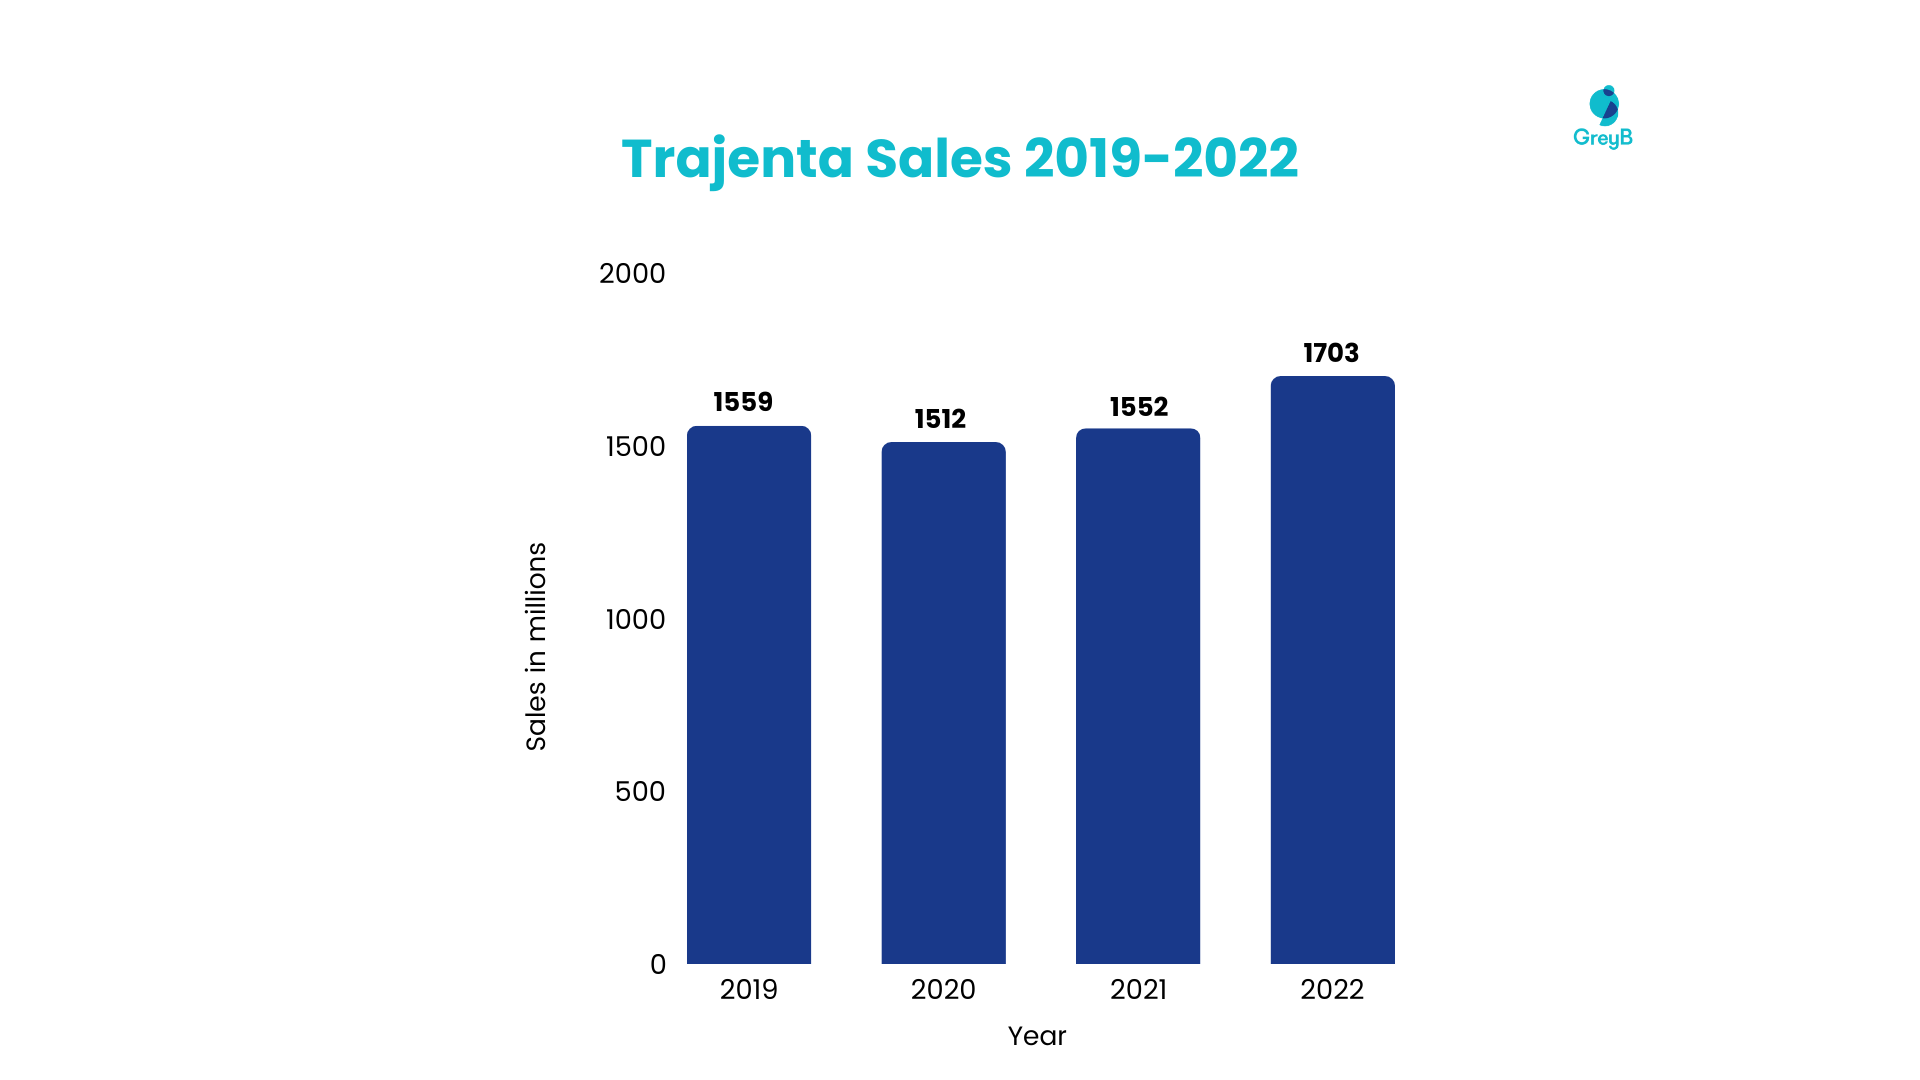 Trajenta Sales 2019-2022